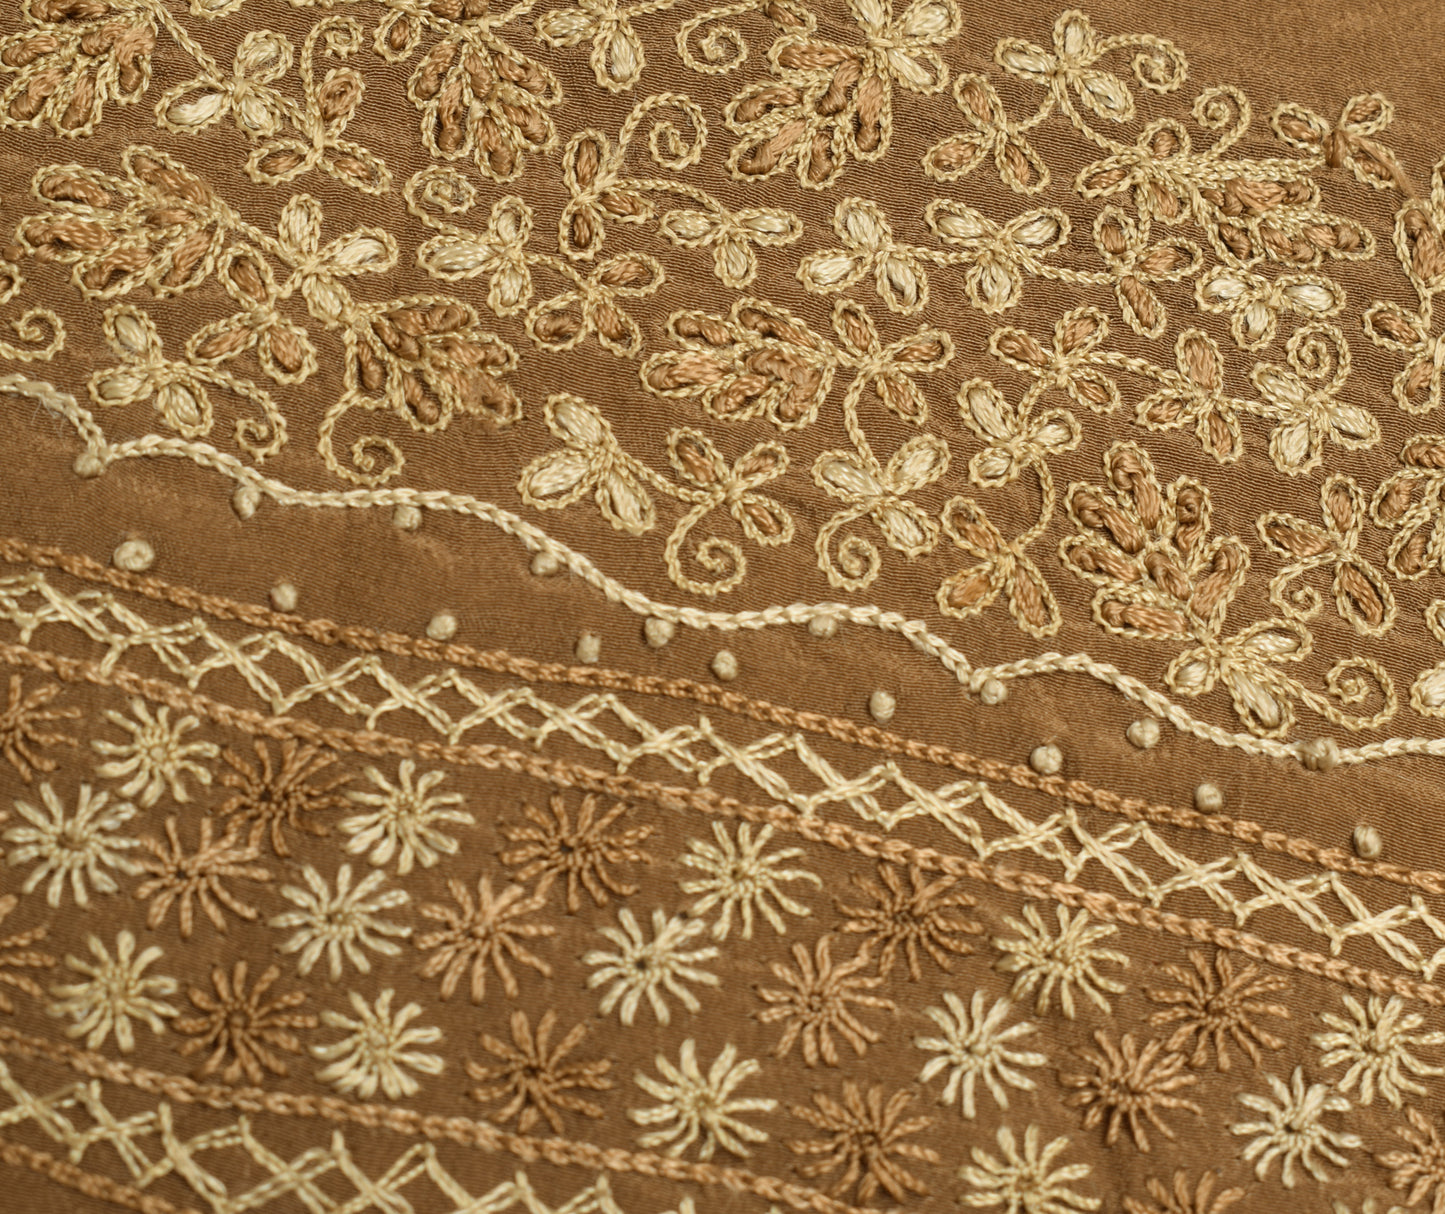 Sushila Vintage Brown Sari Remnant Scrap Crepe Silk Hand Embroidery Craft Fabric